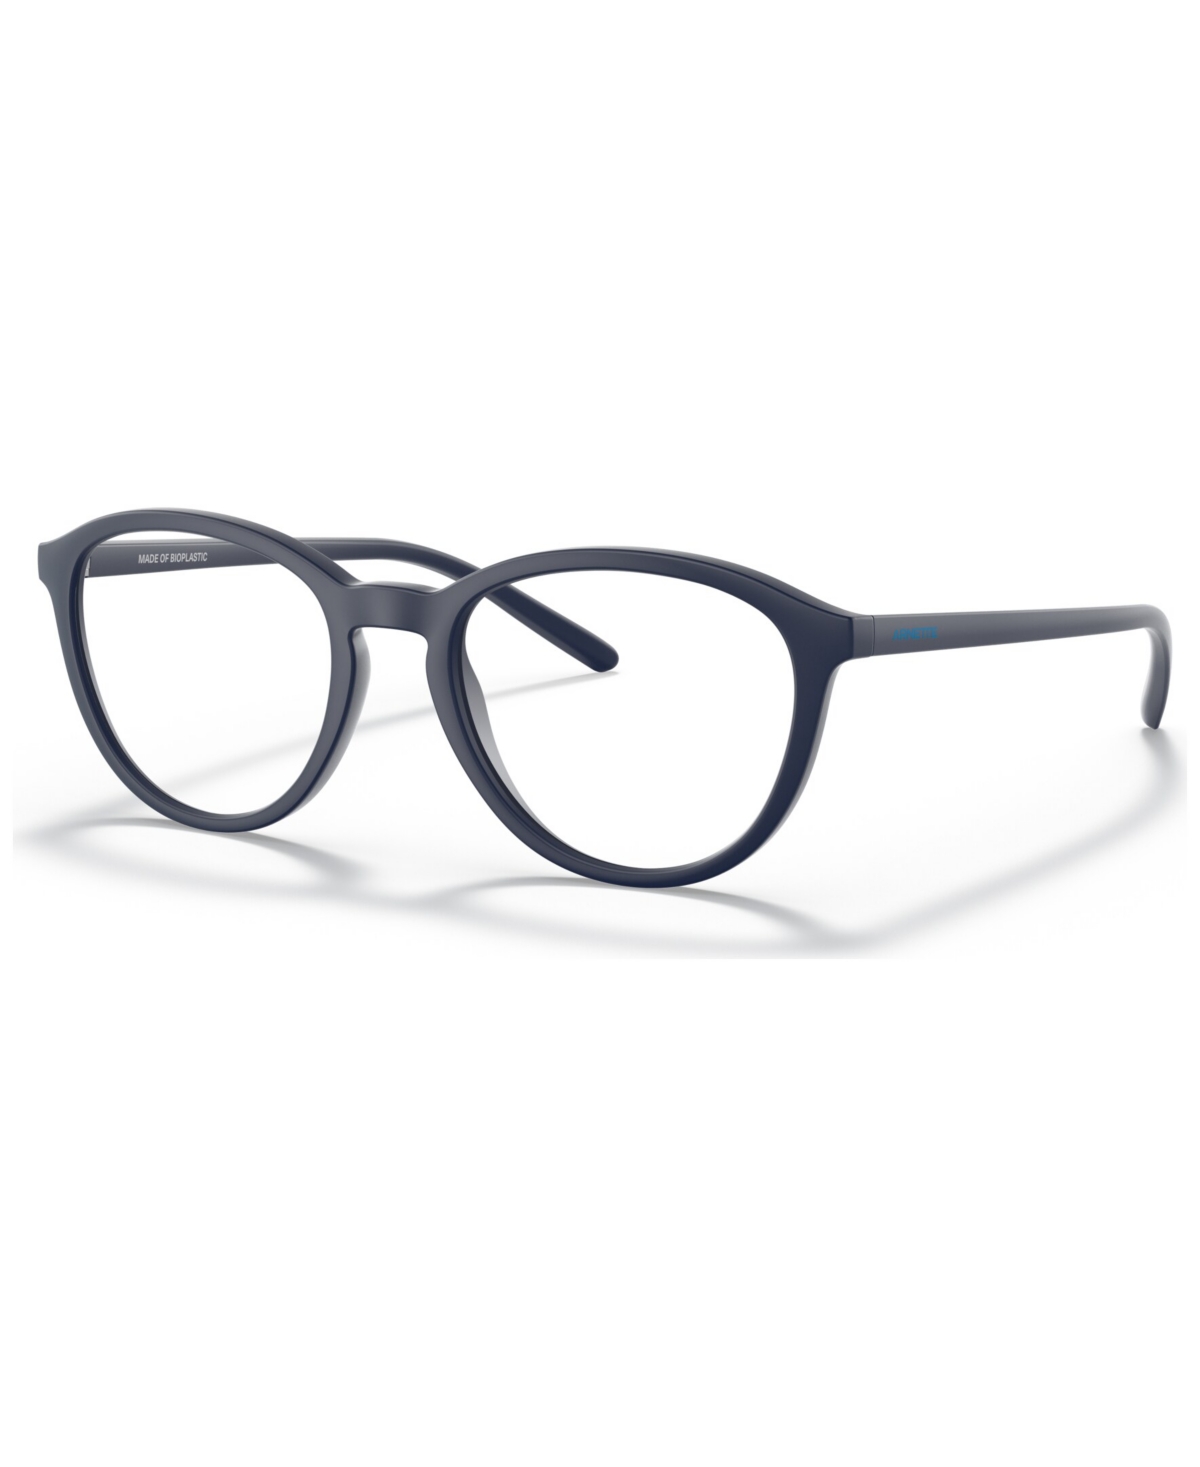 Unisex Phantos Eyeglasses, AN721052-o - Matte Navy Blue